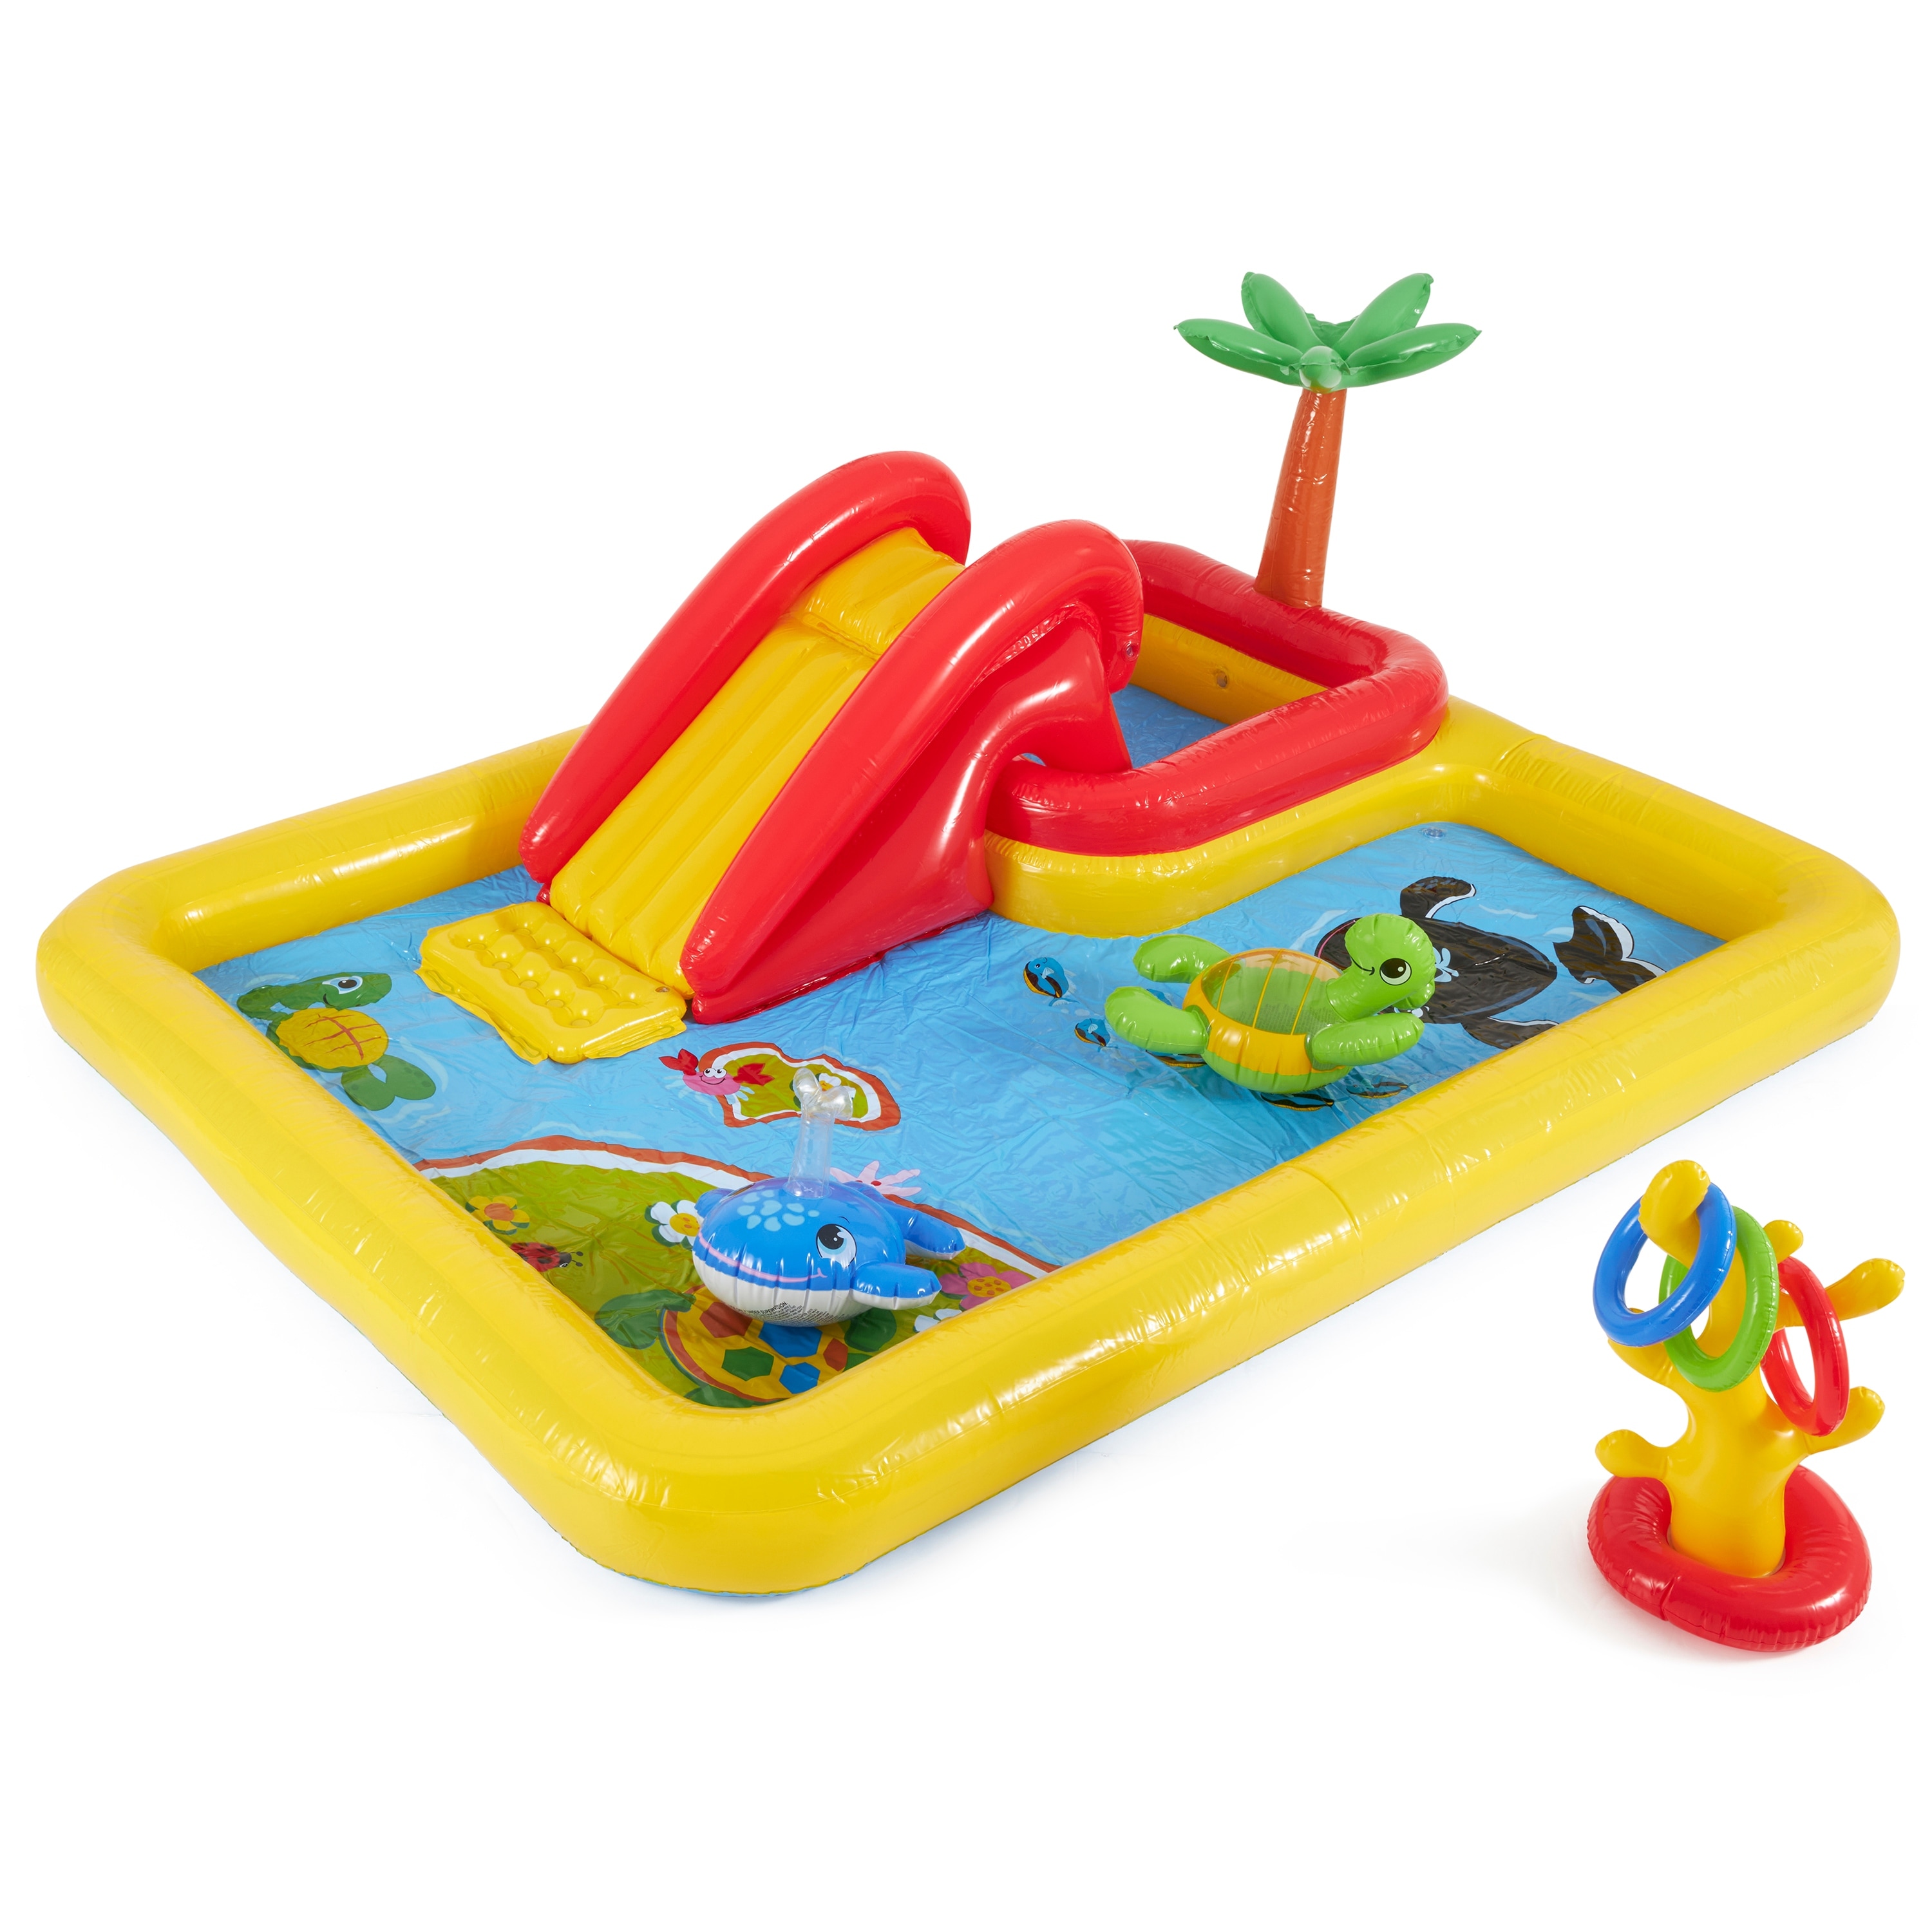 Intex 100" x Inflatable Play Center Kids Backyard Kiddie Pool & Games - 14.8 - - 35067056